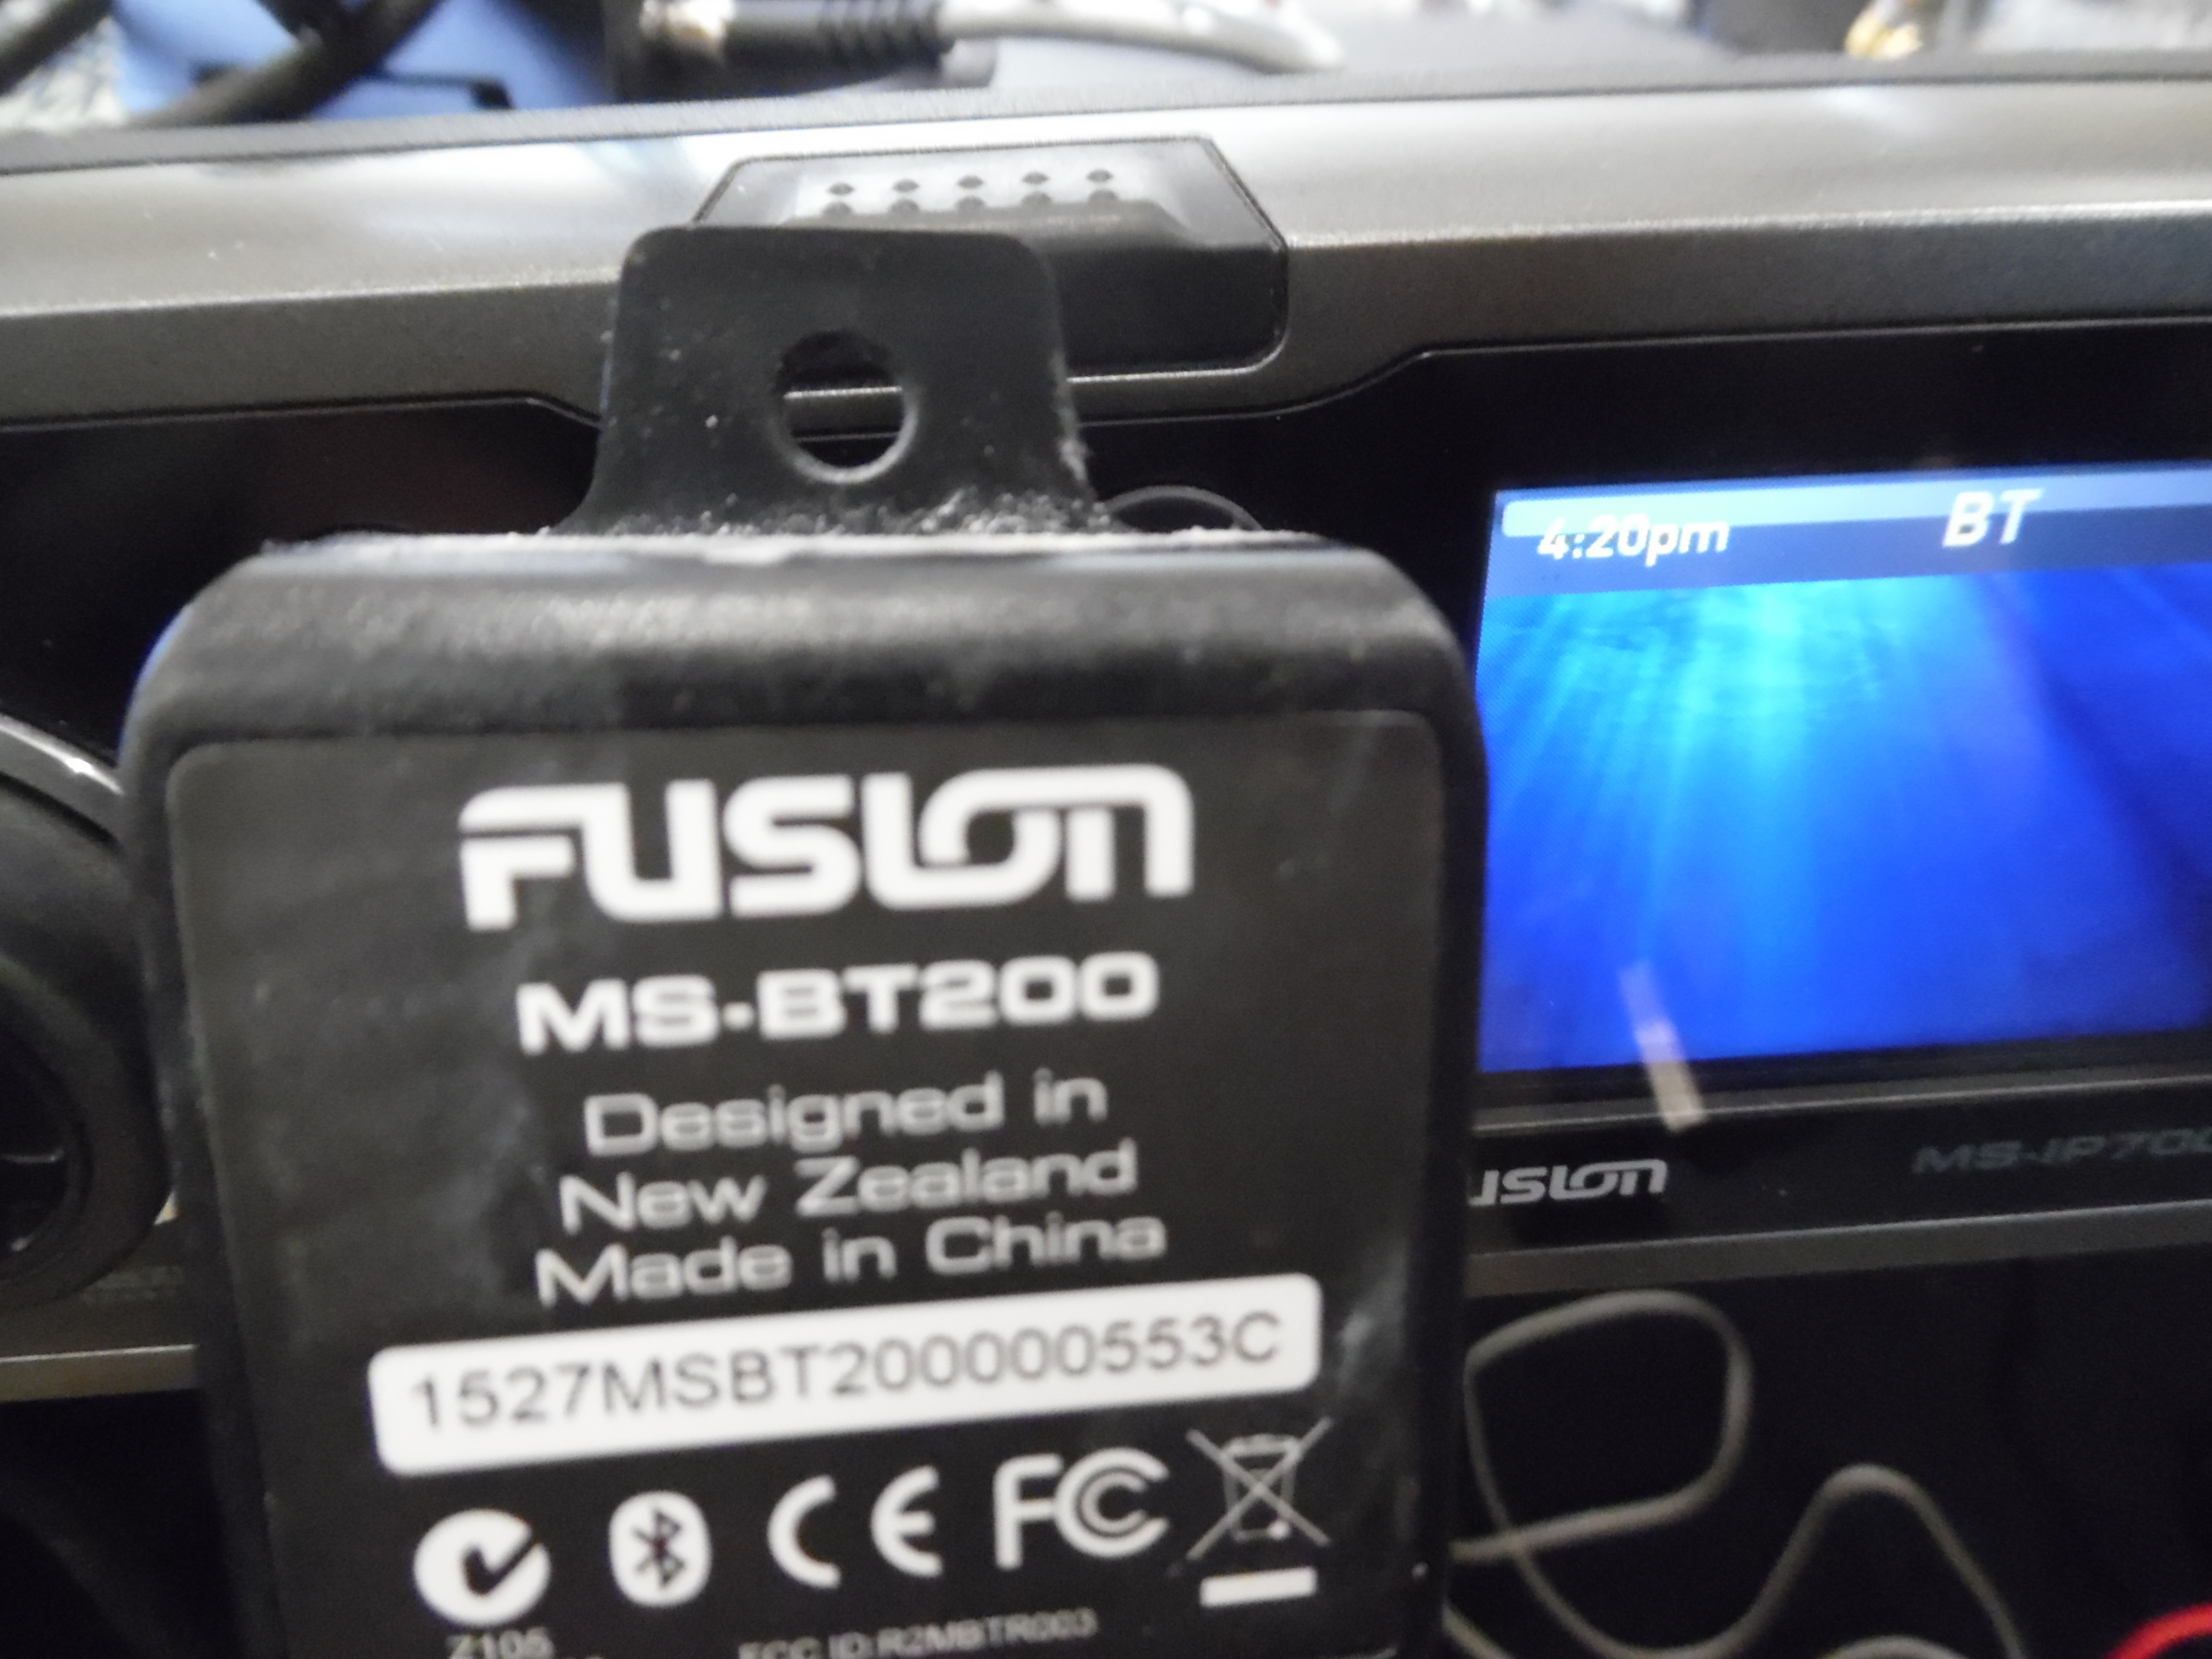 fusion ms ra205 troubleshooting